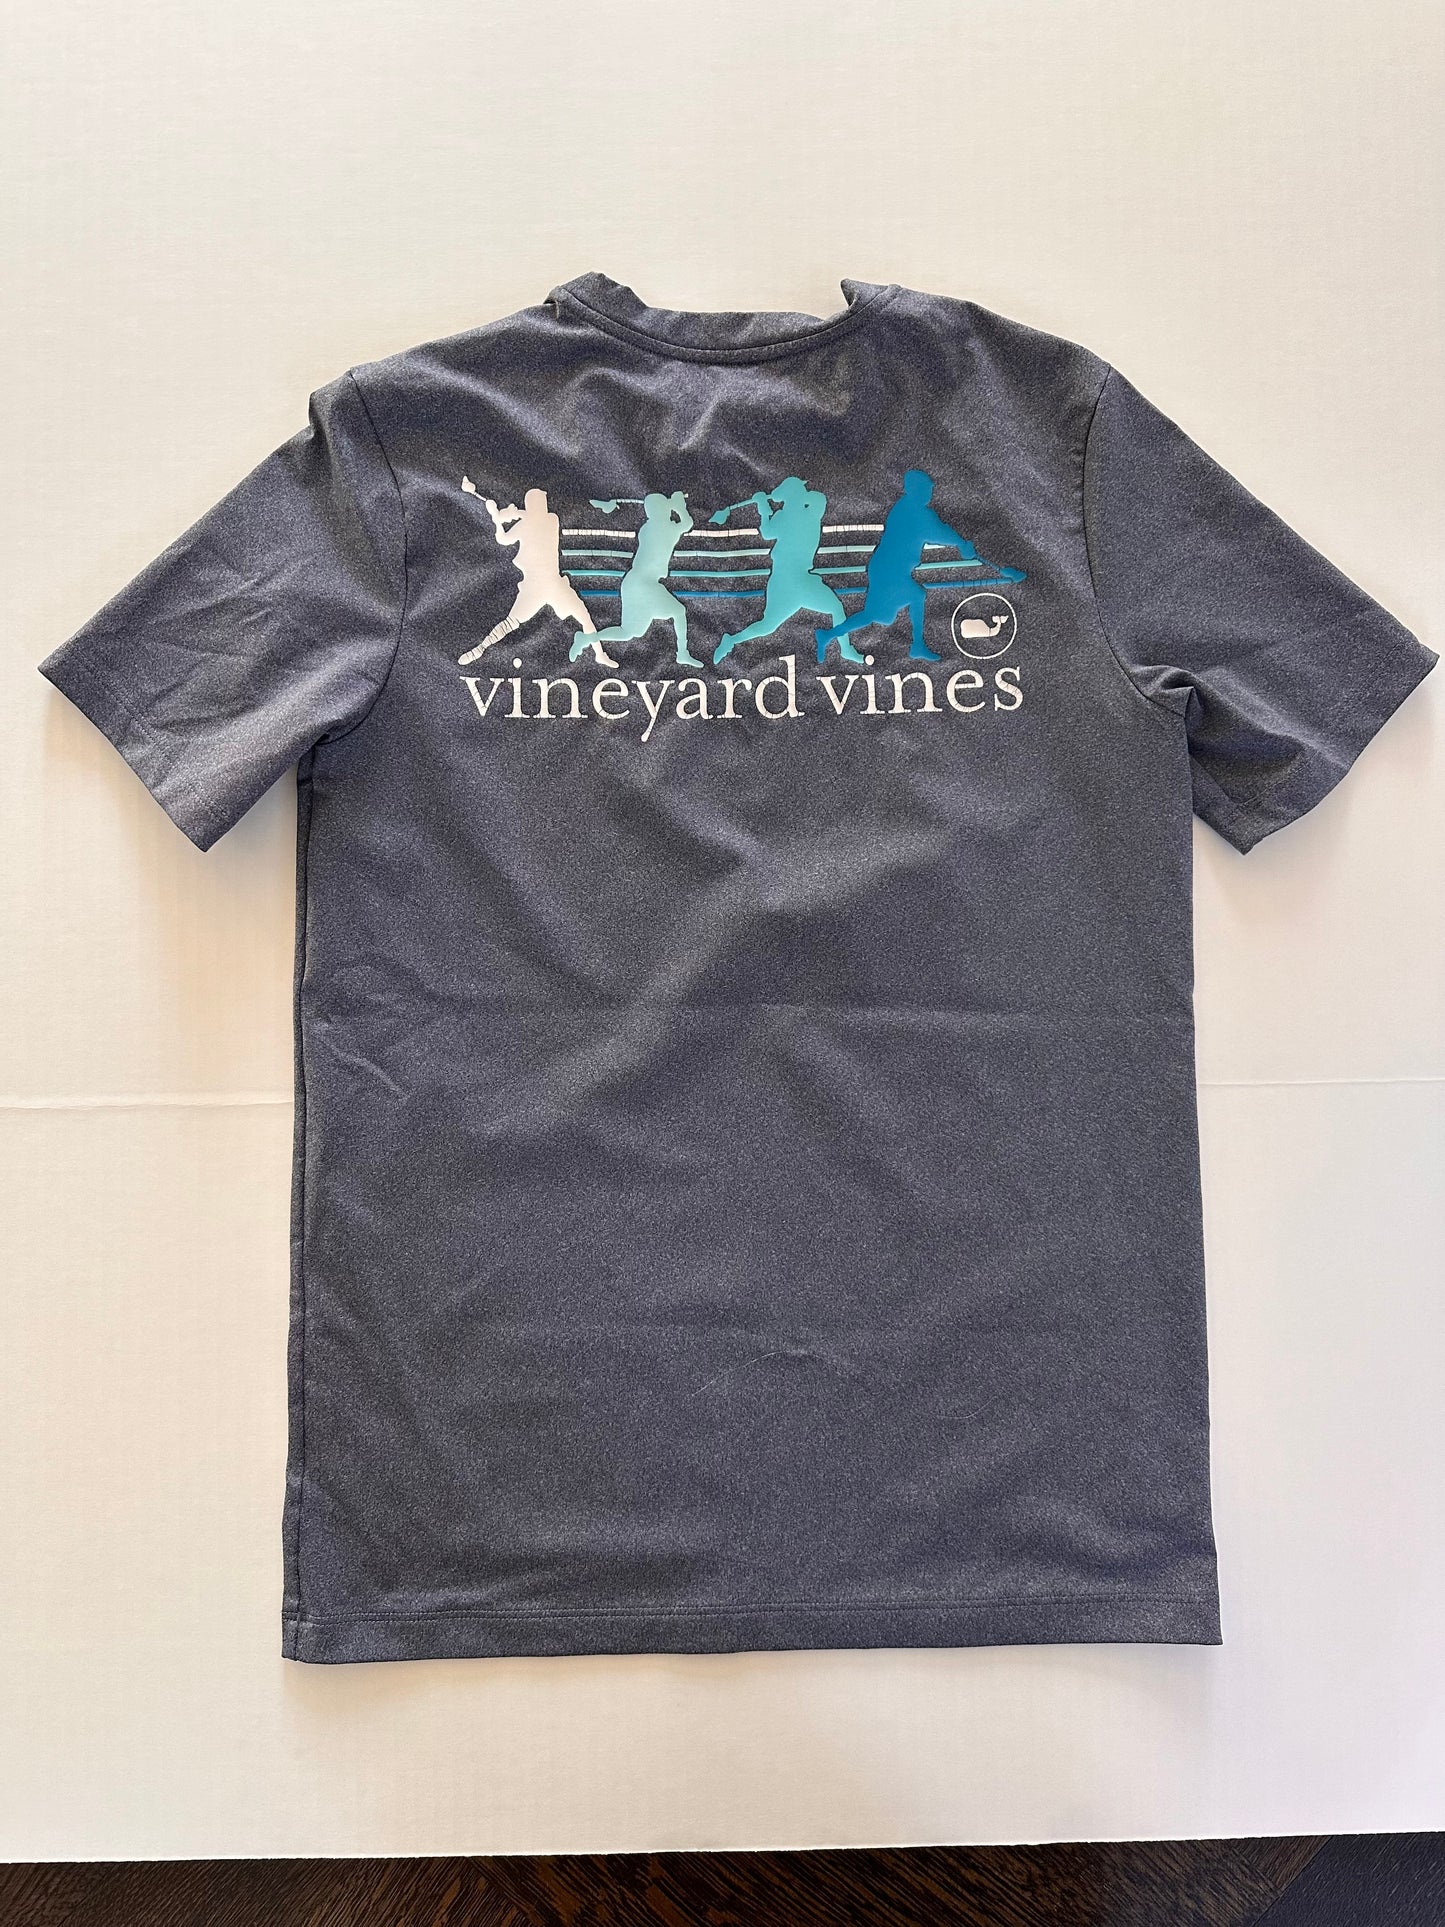 Vineyard Vines Boys Medium 10-12 performance T shirt